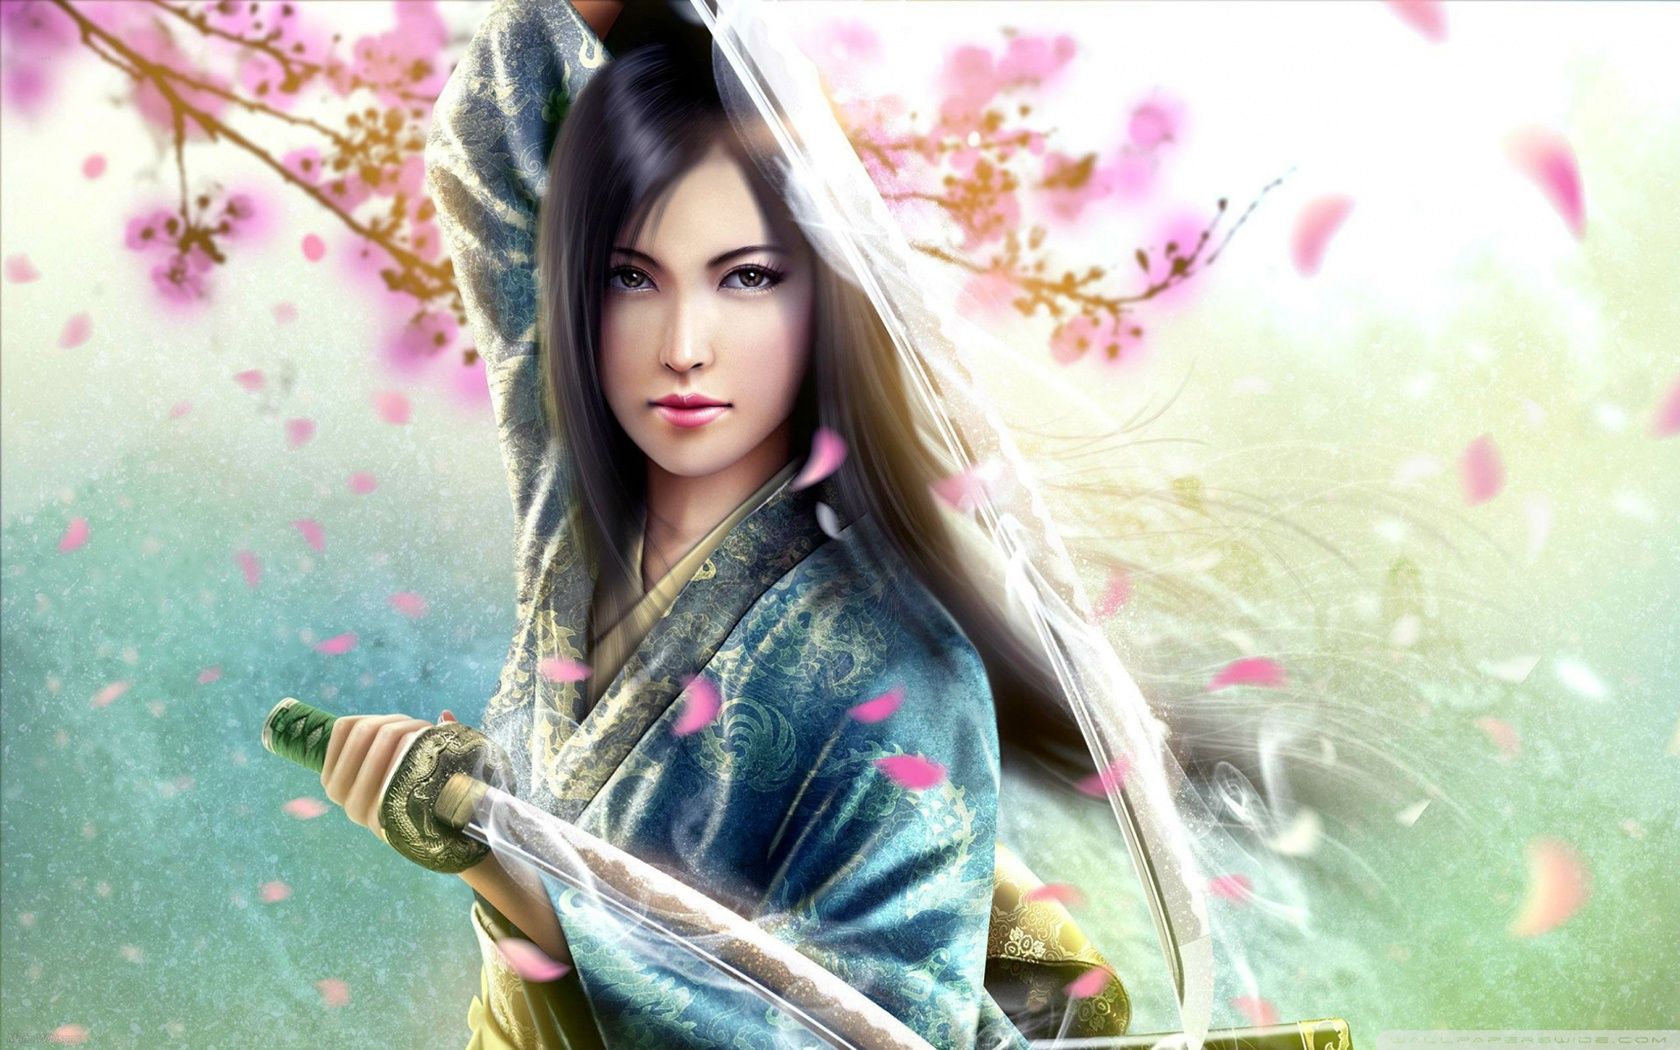 Woman Samurai Ultra HD Desktop Background Wallpaper for 4K UHD TV, Tablet